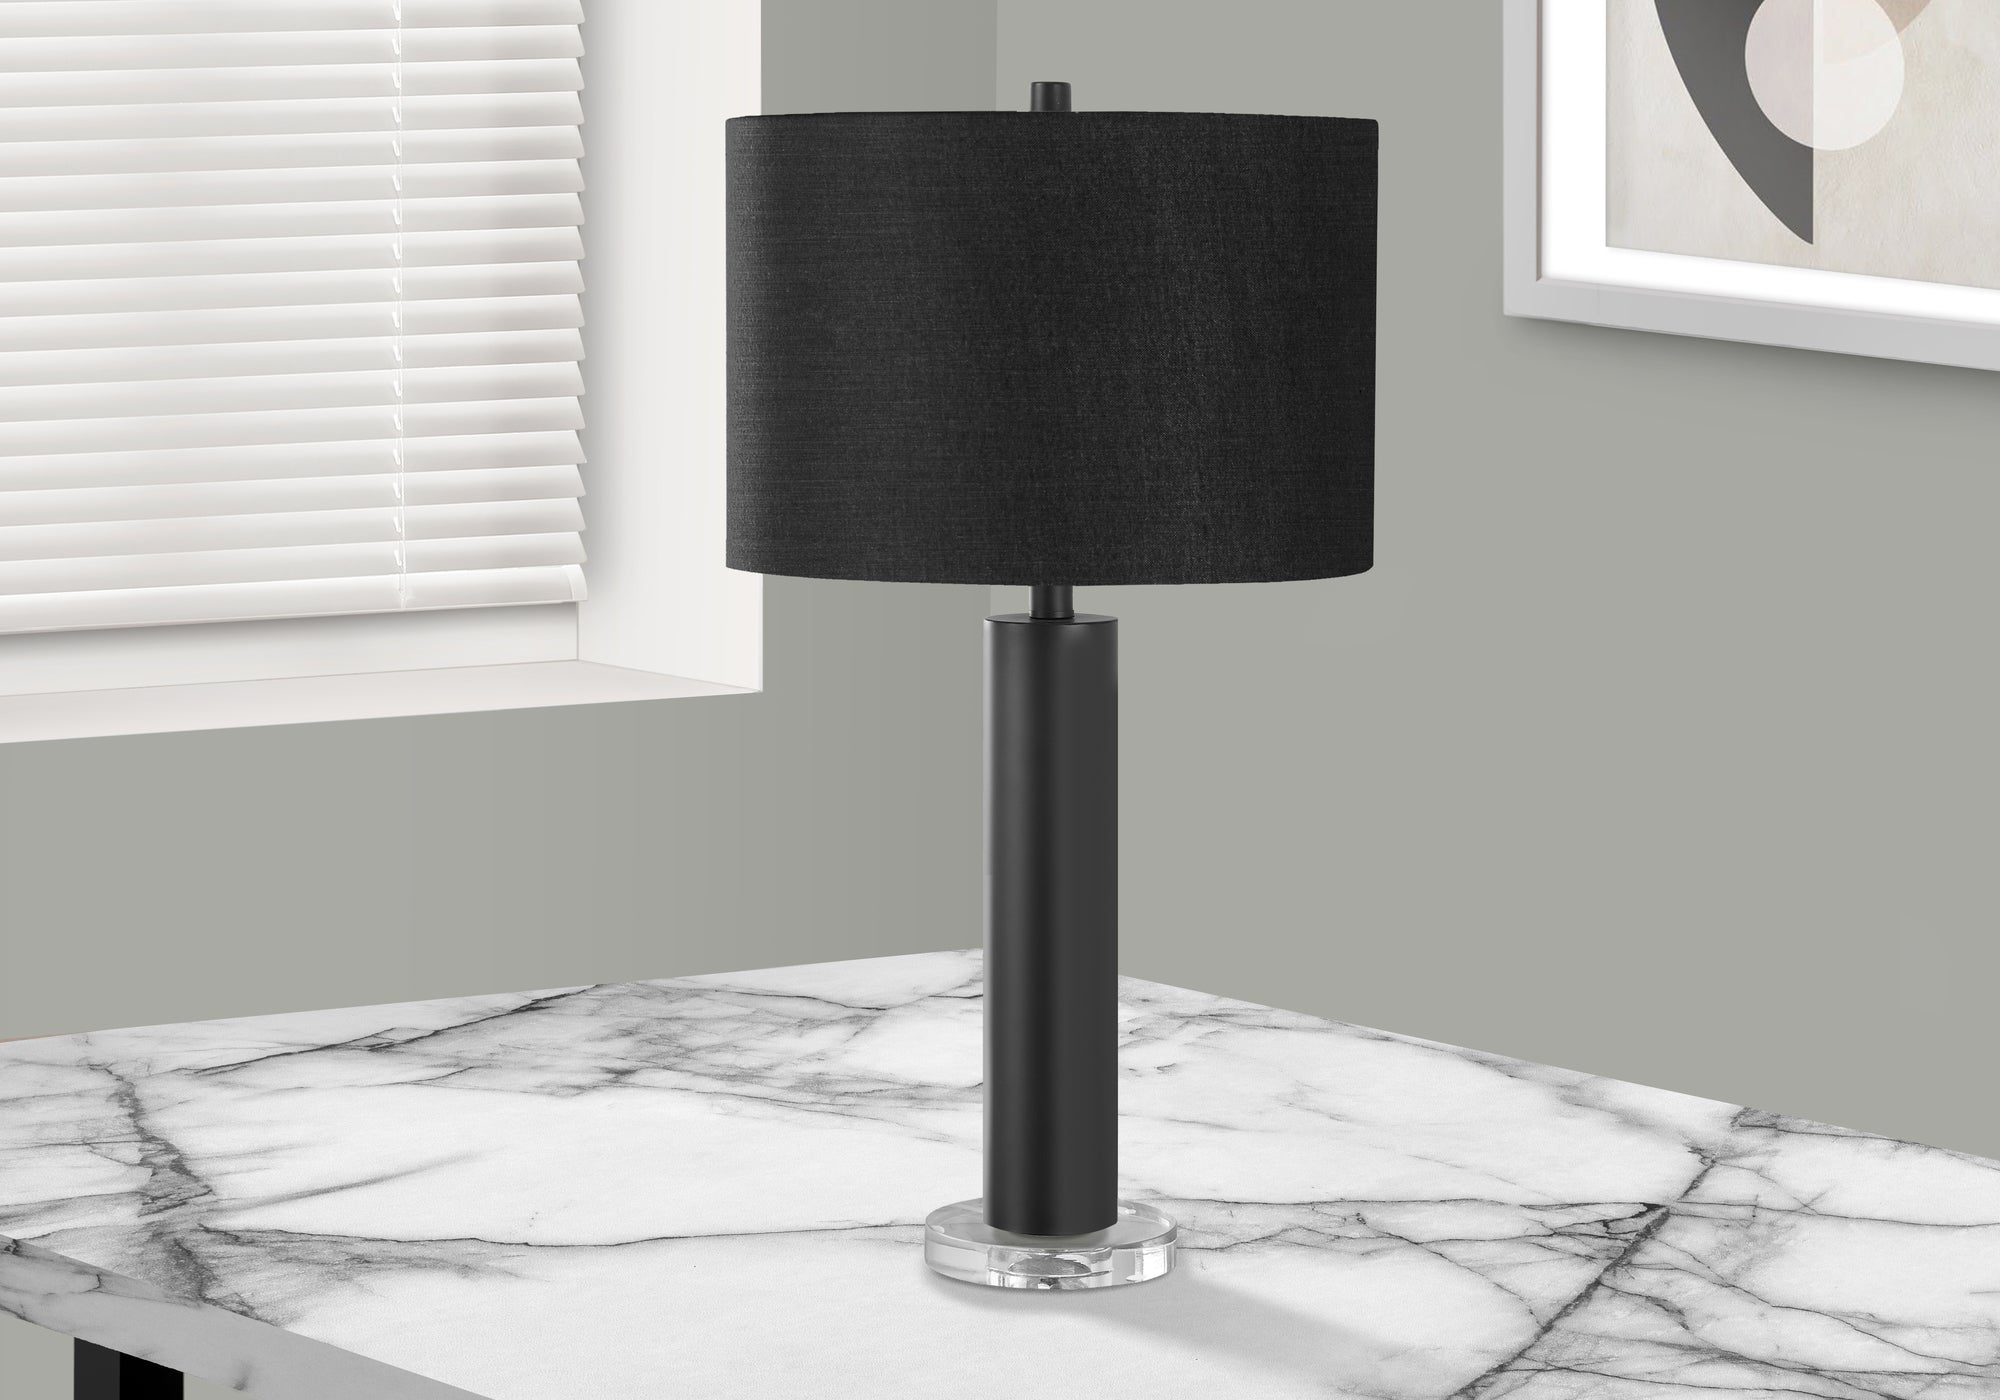 MN-339658    Lighting, 28"H, Table Lamp, Black Metal, Black Shade, Contemporary, Modern